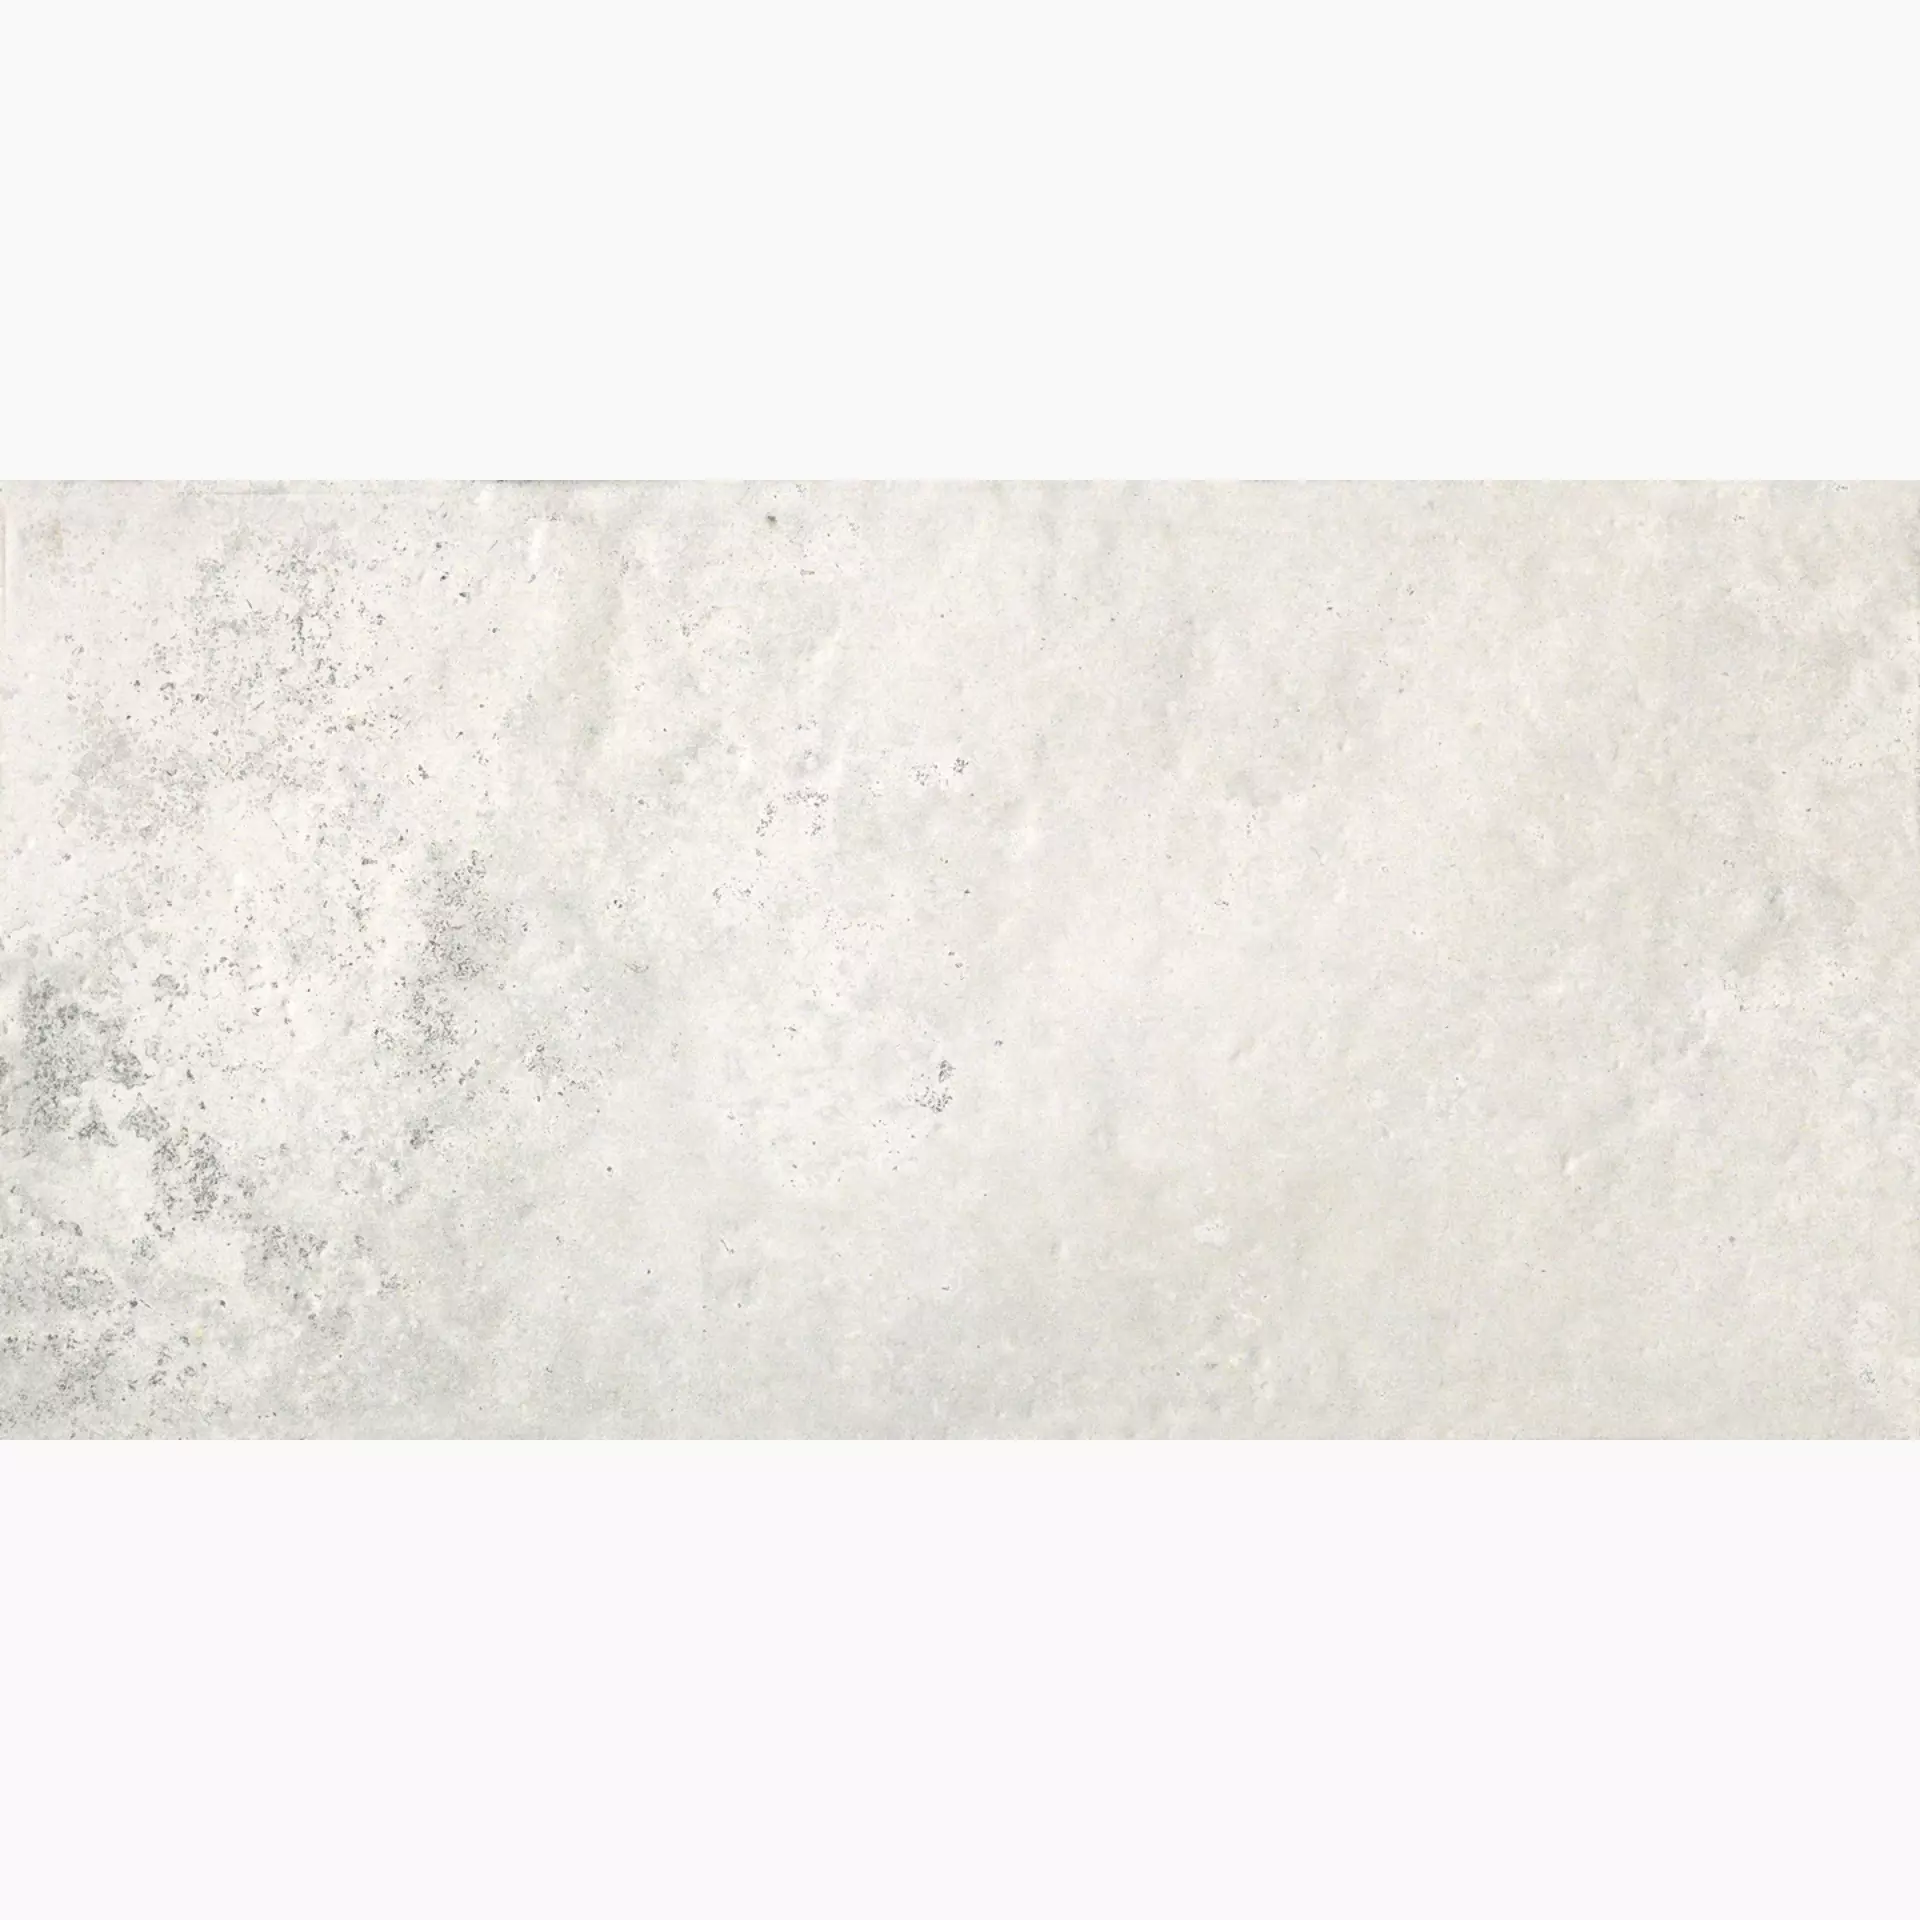 Sichenia Chambord Bianco Lappato CHBP611 60x120cm 10mm